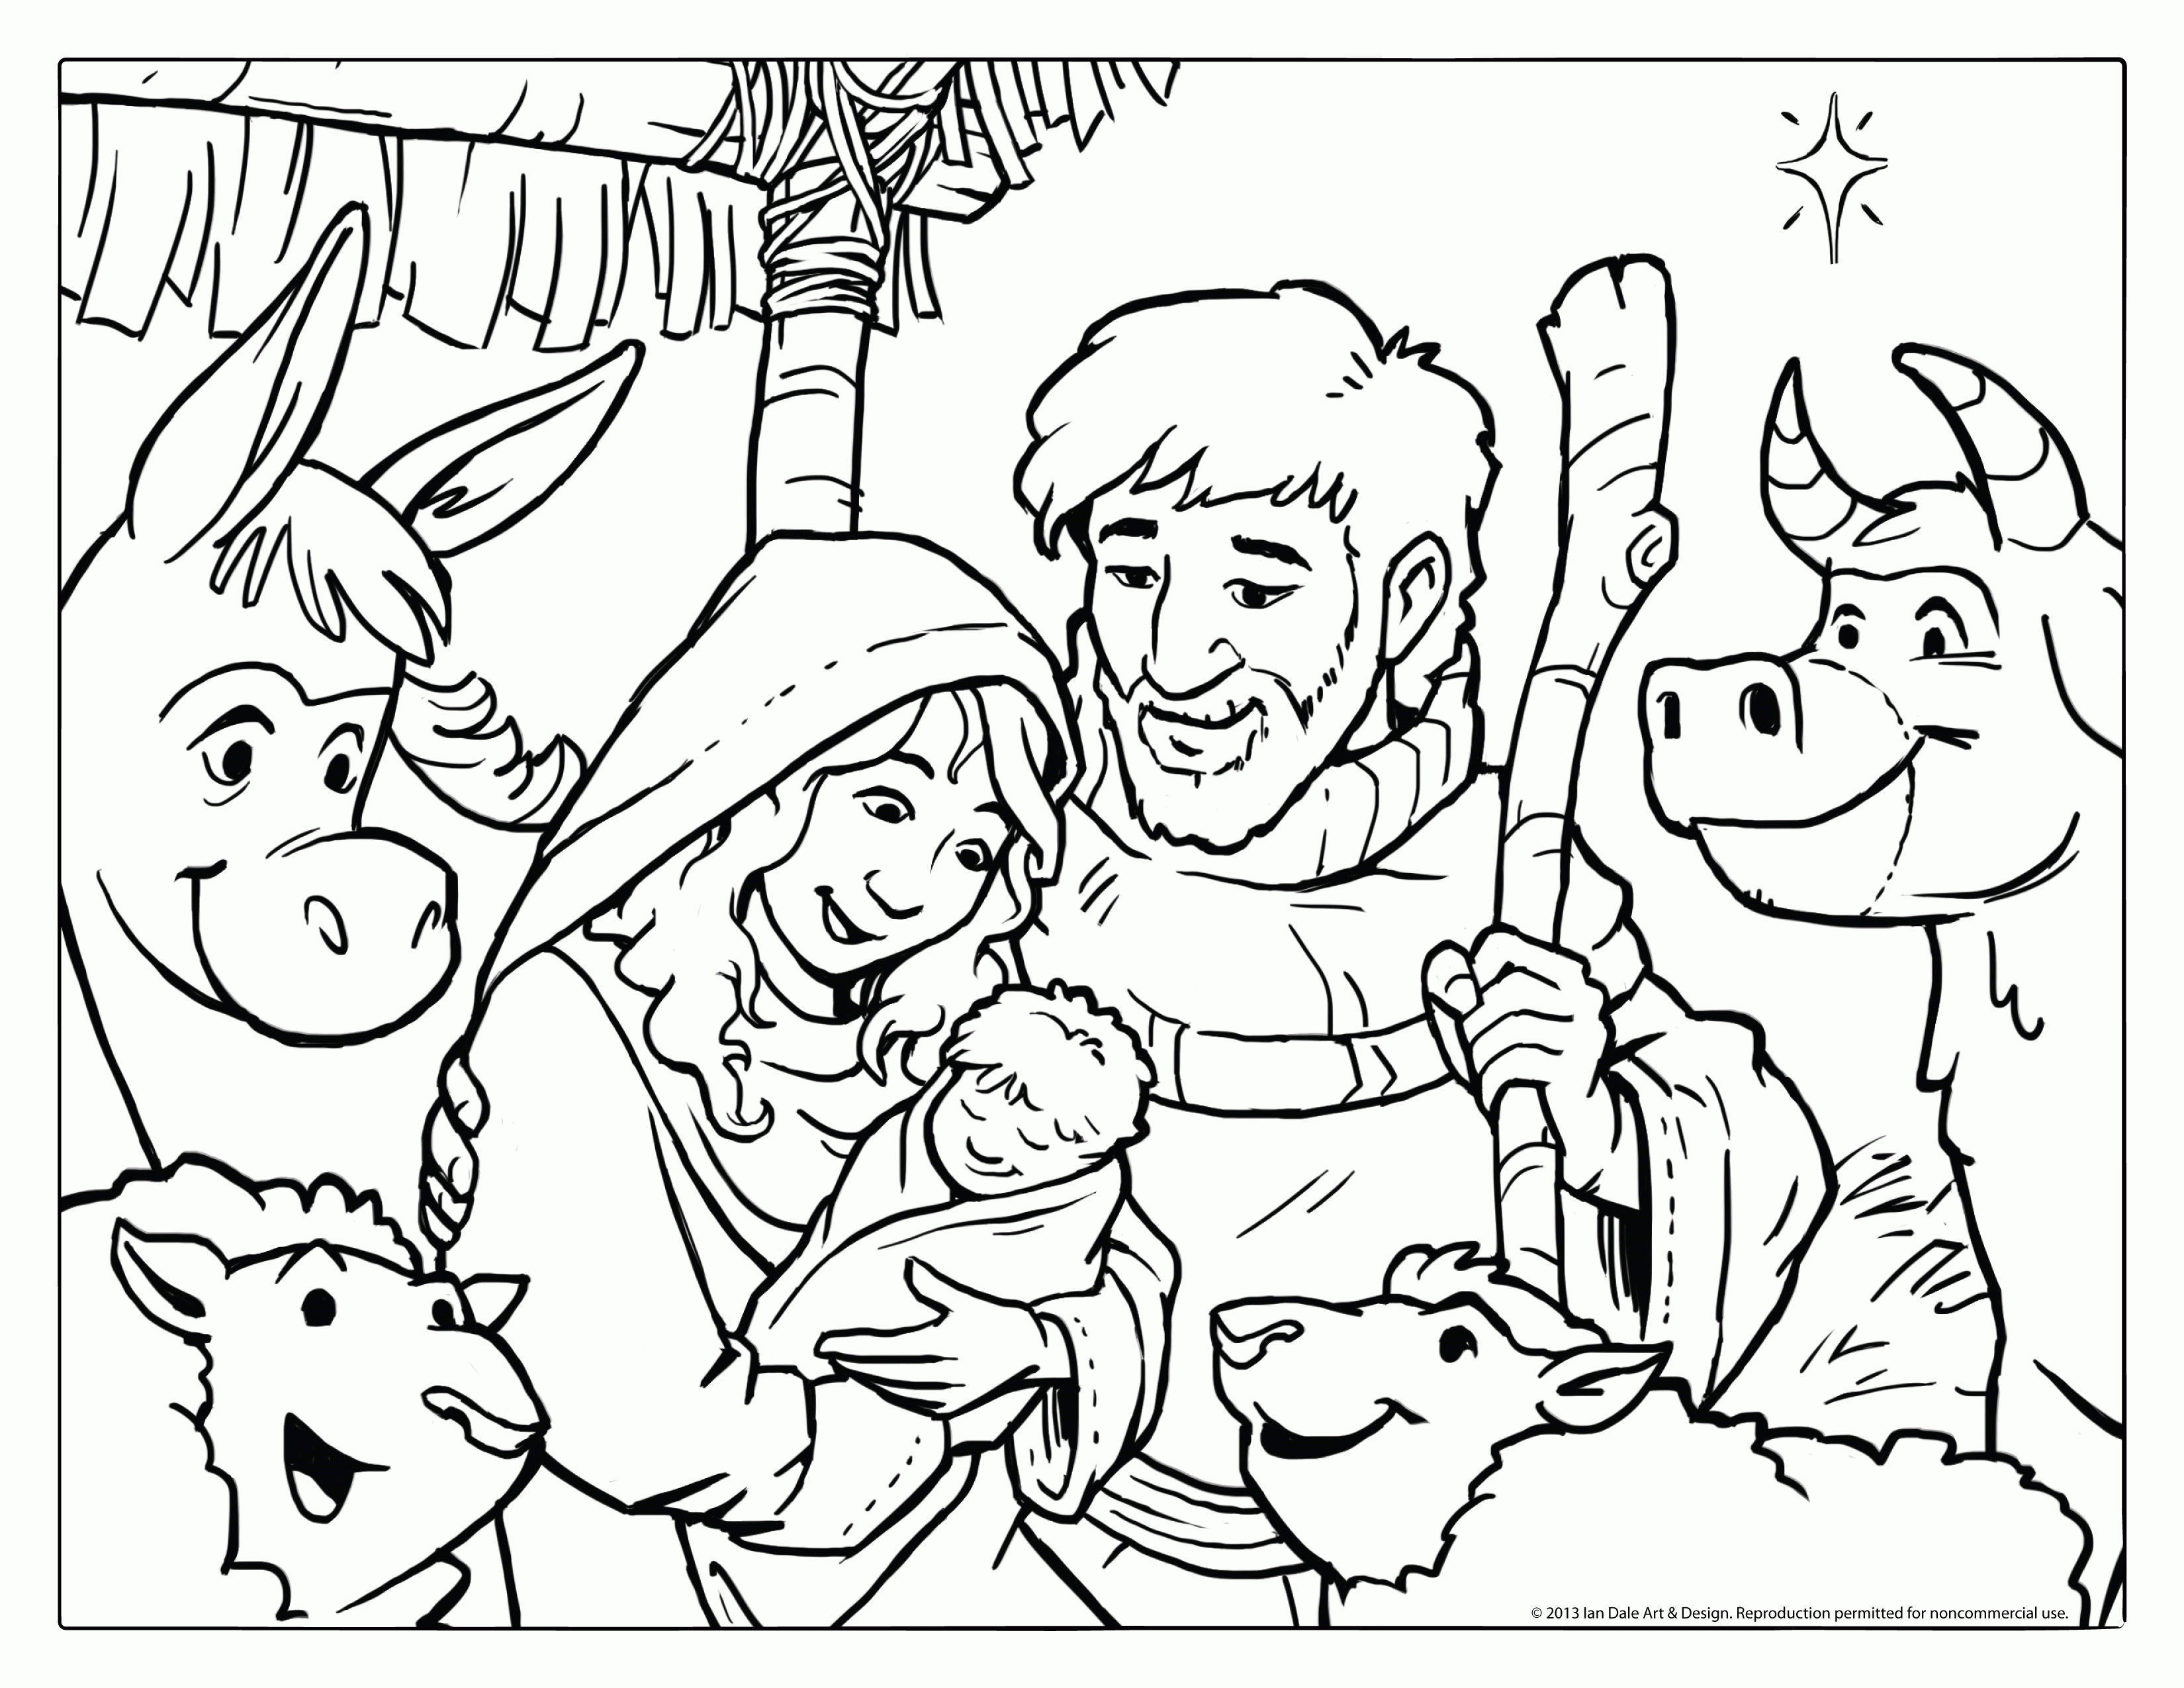 Ian Dale Art & Design | Blog: Christmas Nativity Scene - Free ...